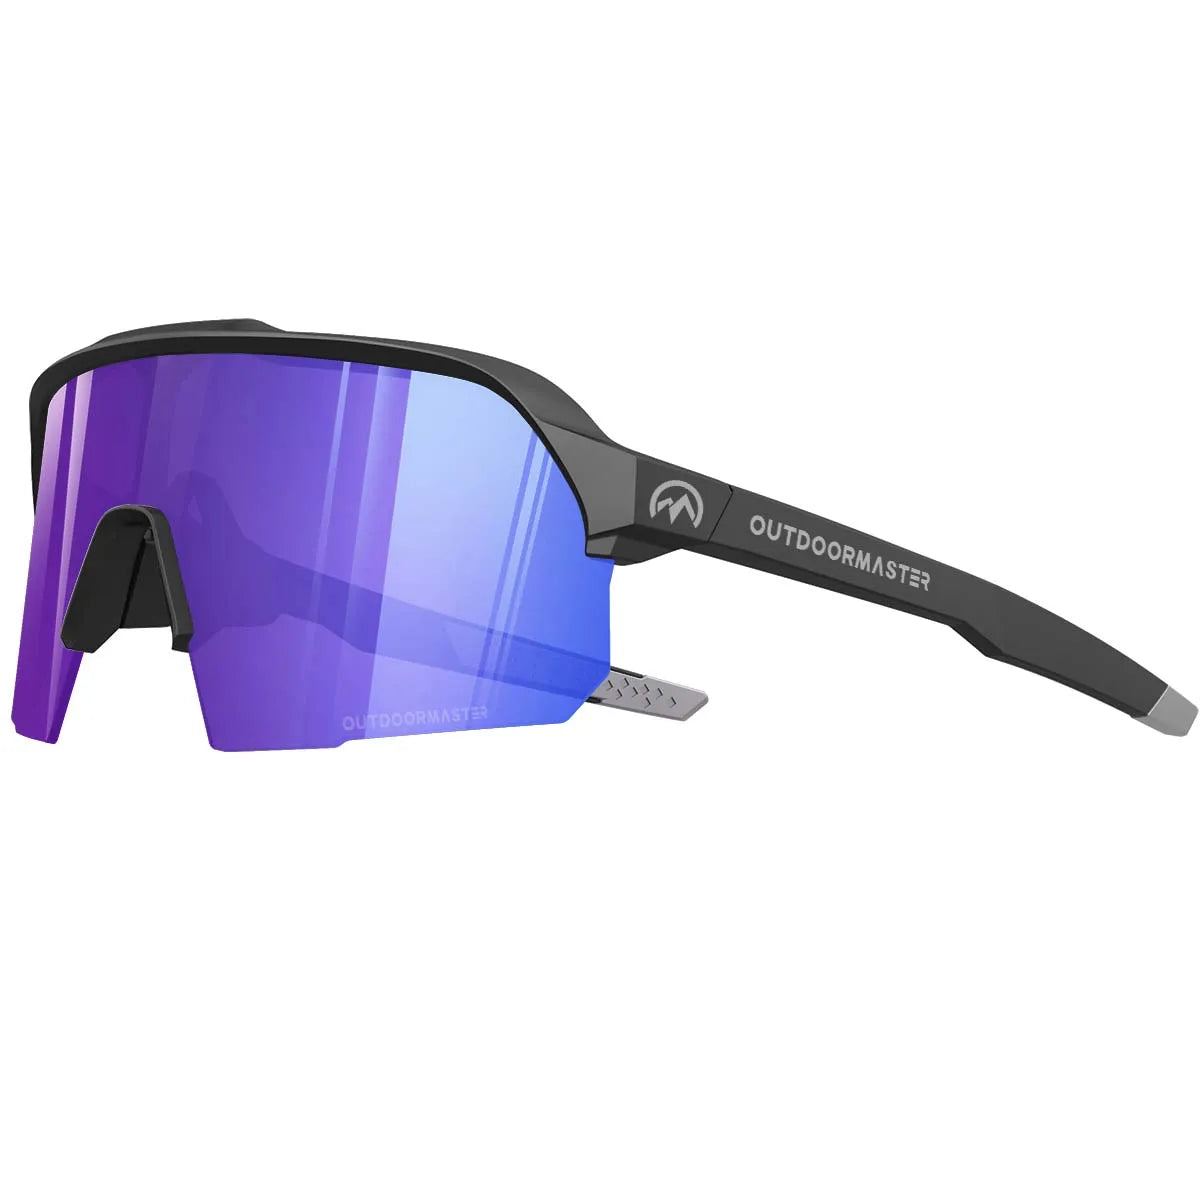 Hawk HD Polarized Sport Sunglasses, Black Frame / Blue VLT18%+Bonus Clear Lens